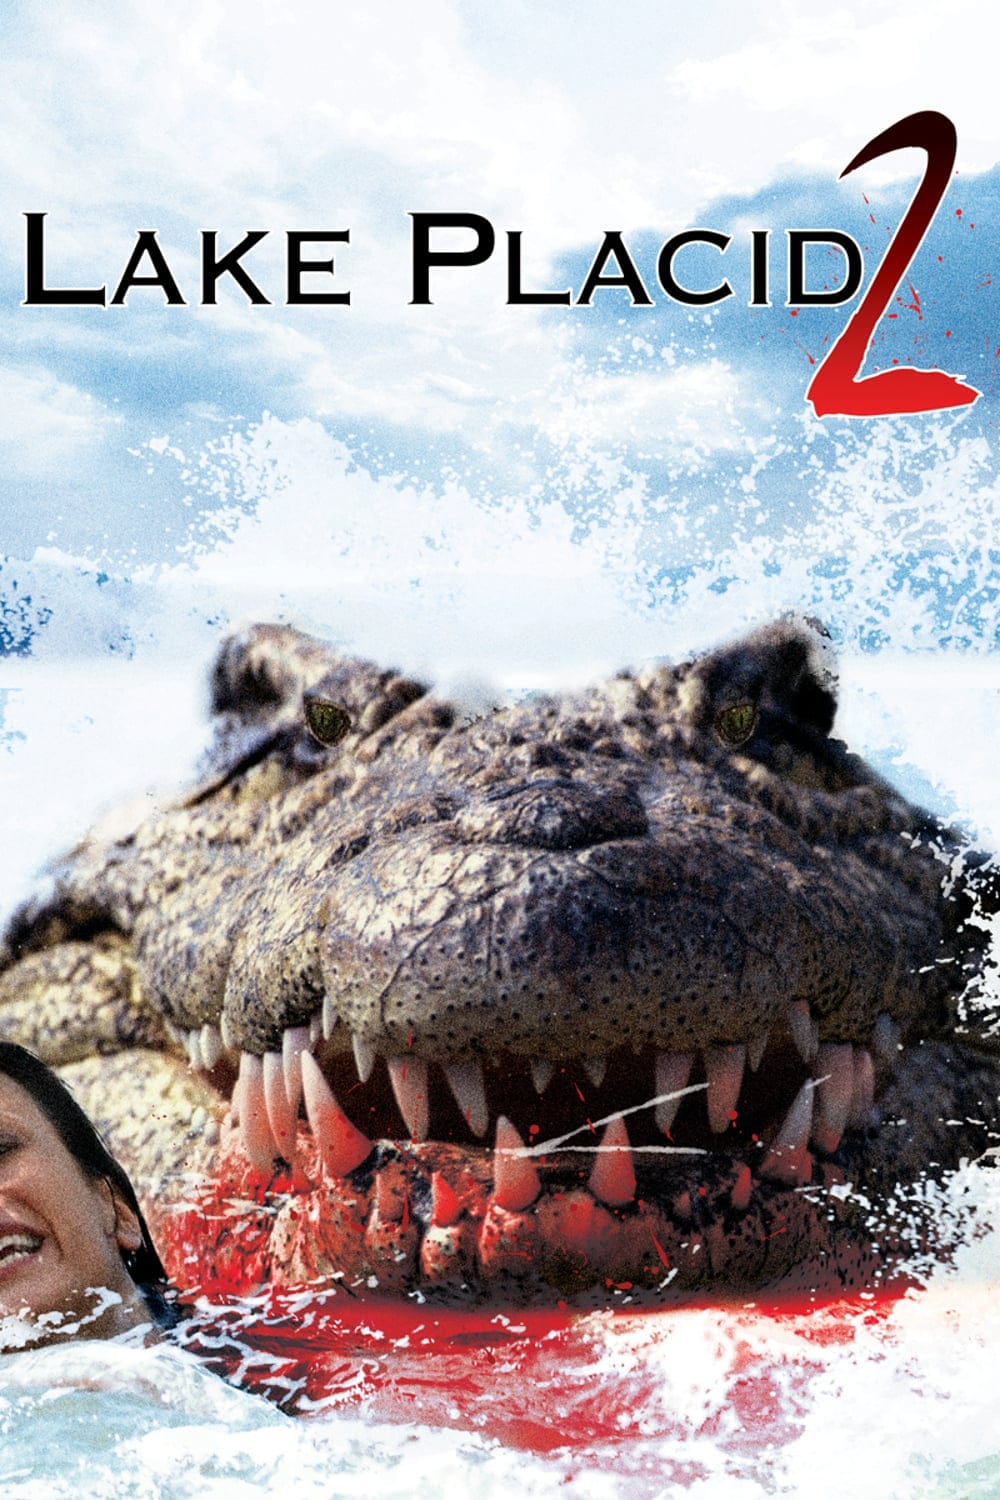 Plakat von "Lake Placid 2"